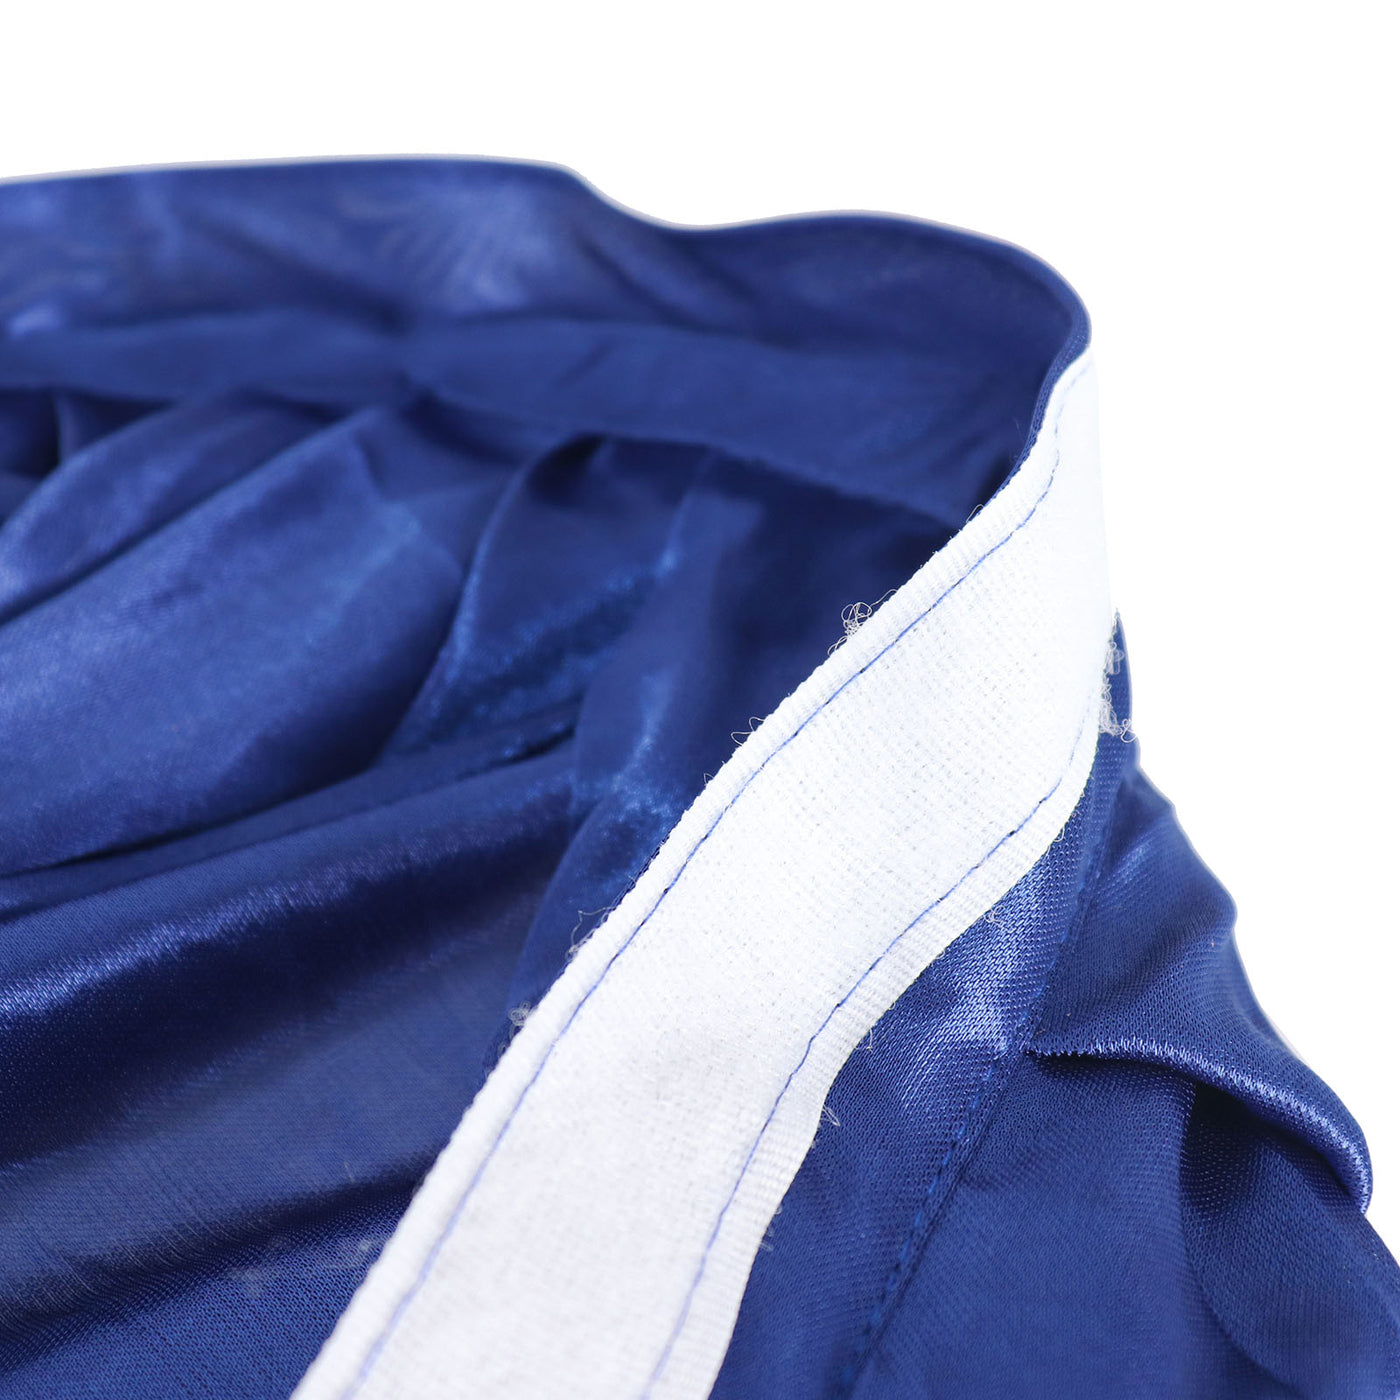 14ft Navy Blue Pleated Satin Table Skirt | eFavormart.com